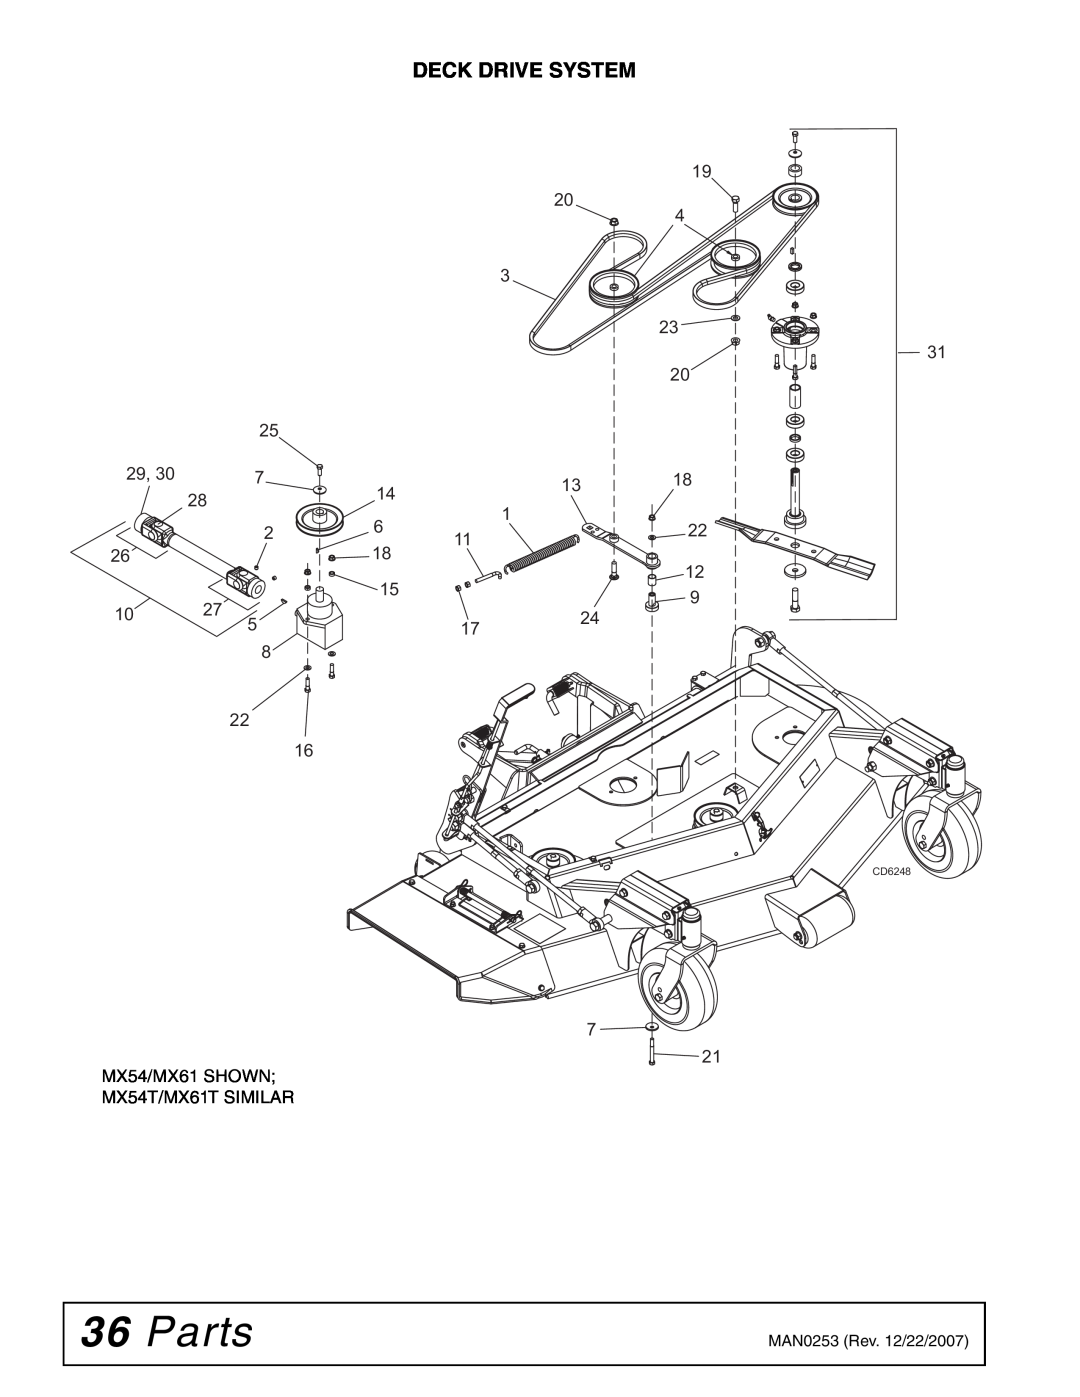 Woods Equipment manual Parts, Deck Drive System, MX54/MX61 SHOWN, MX54T/MX61T SIMILAR, CD6248 